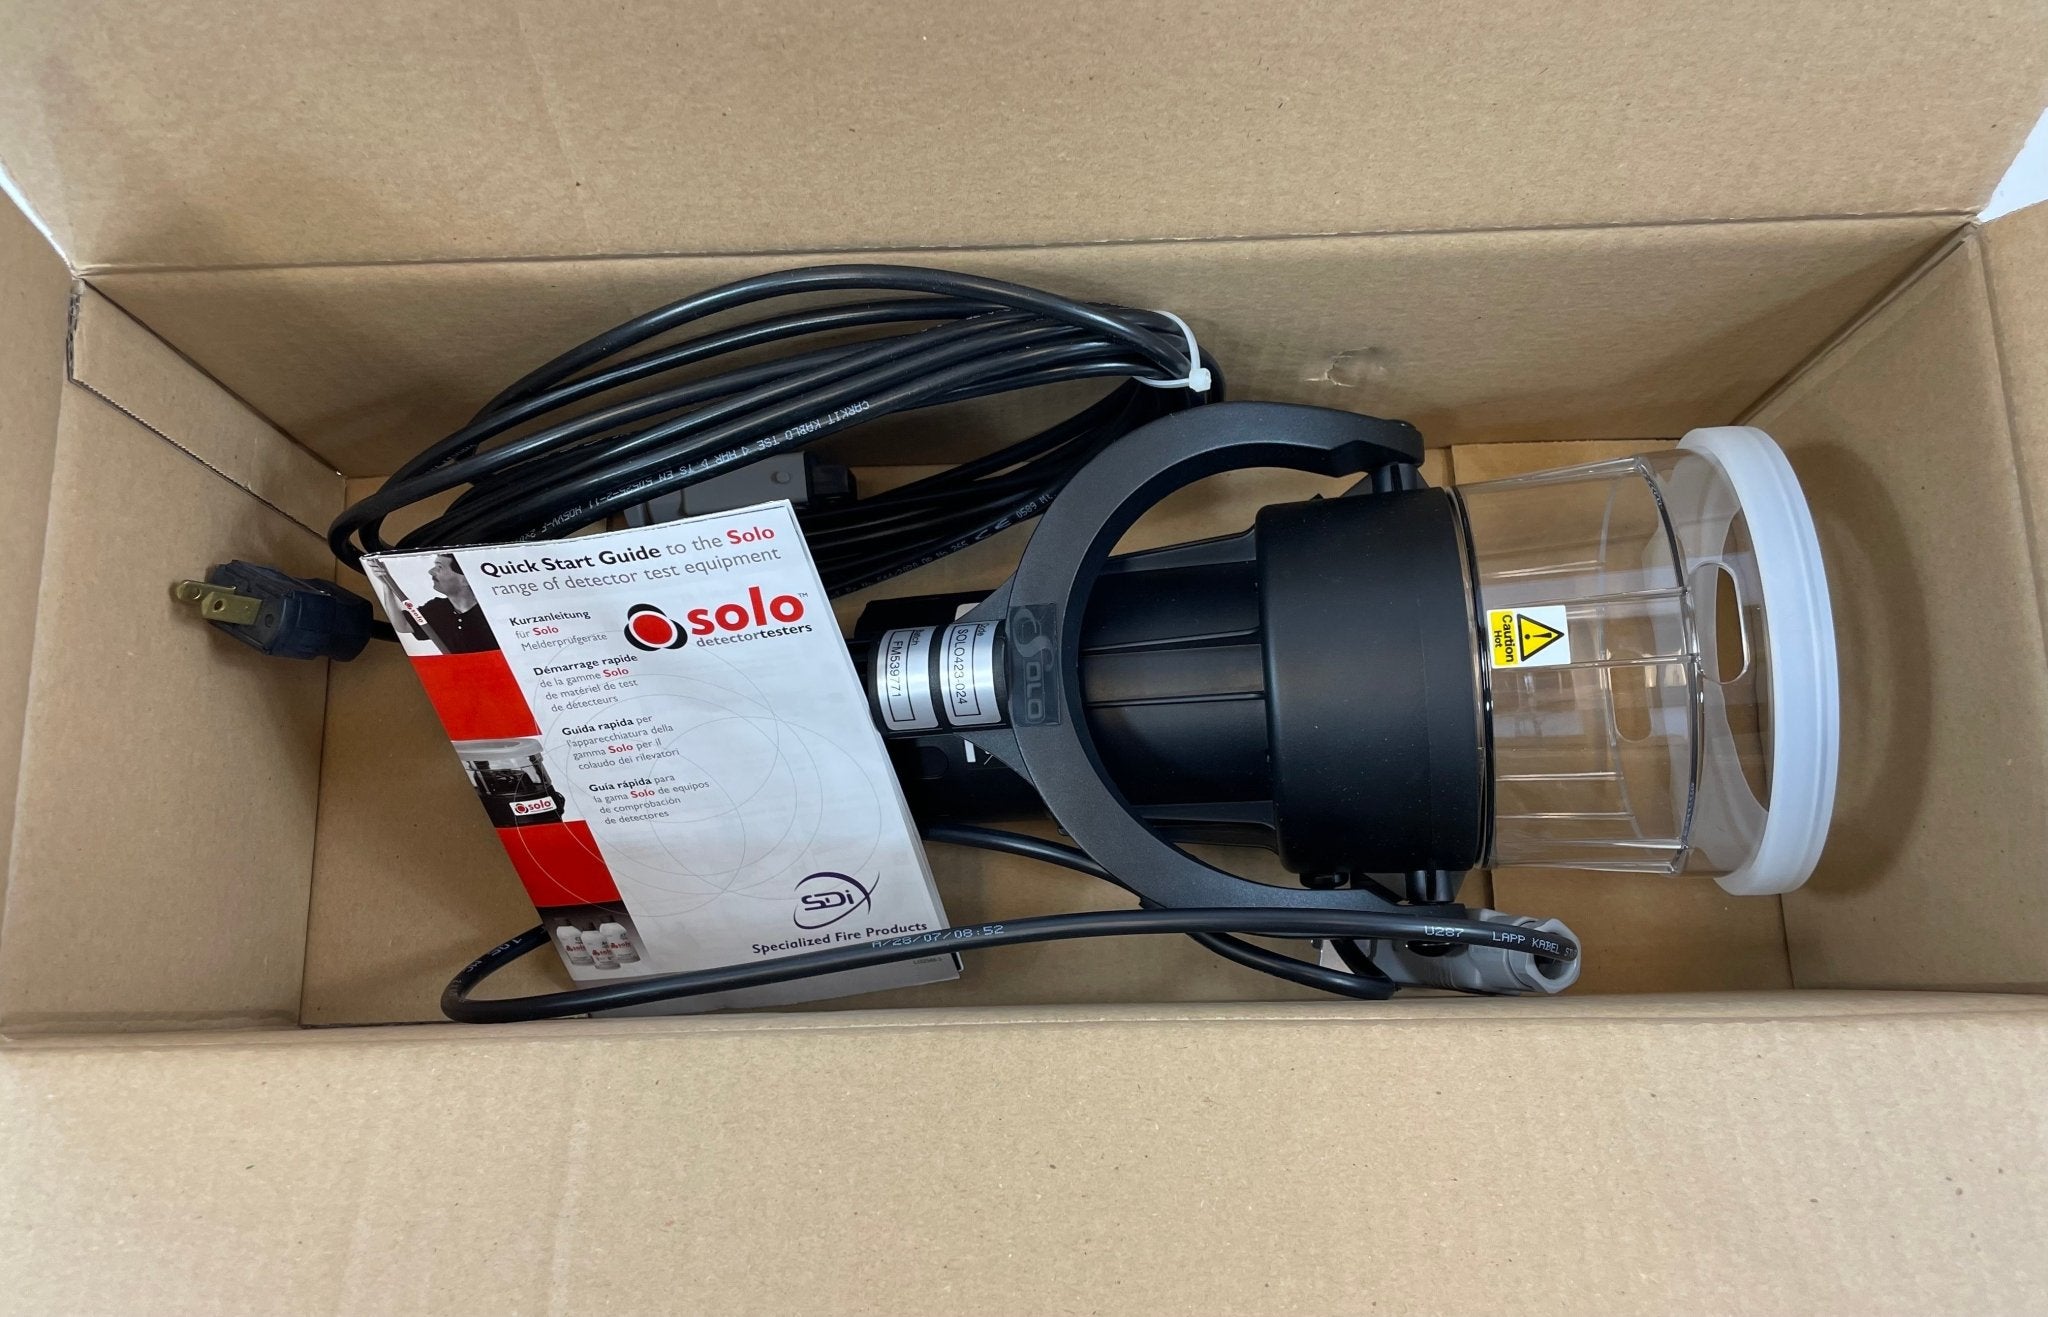 SDi SOLO423 Corded Heat Detector Tester - The Fire Alarm Supplier